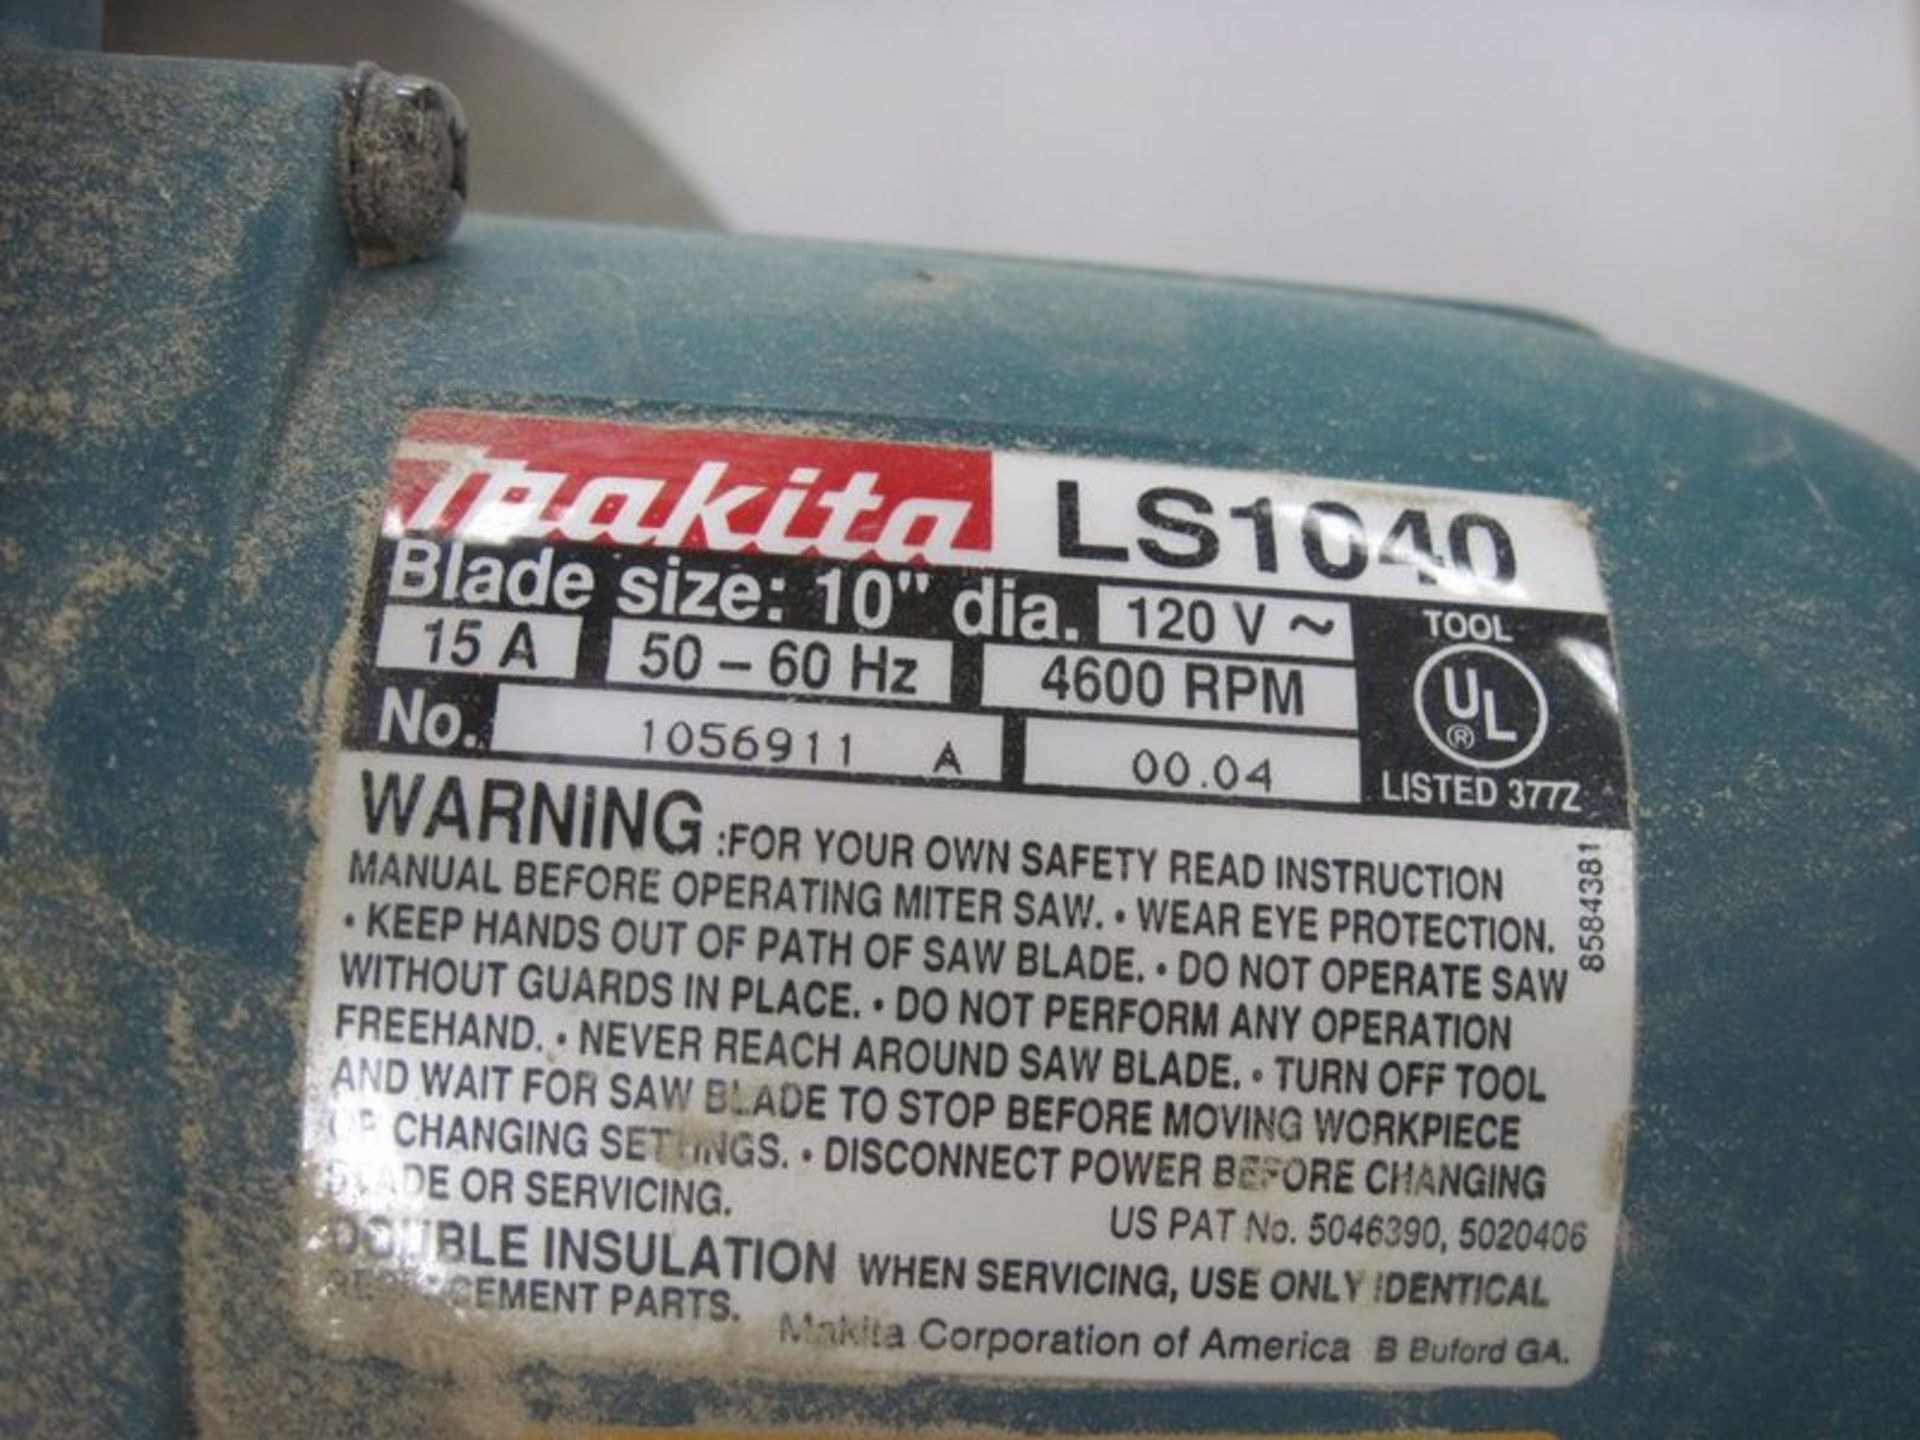 Makita 10" compound miter saw, M/N LS1040 - Image 2 of 2